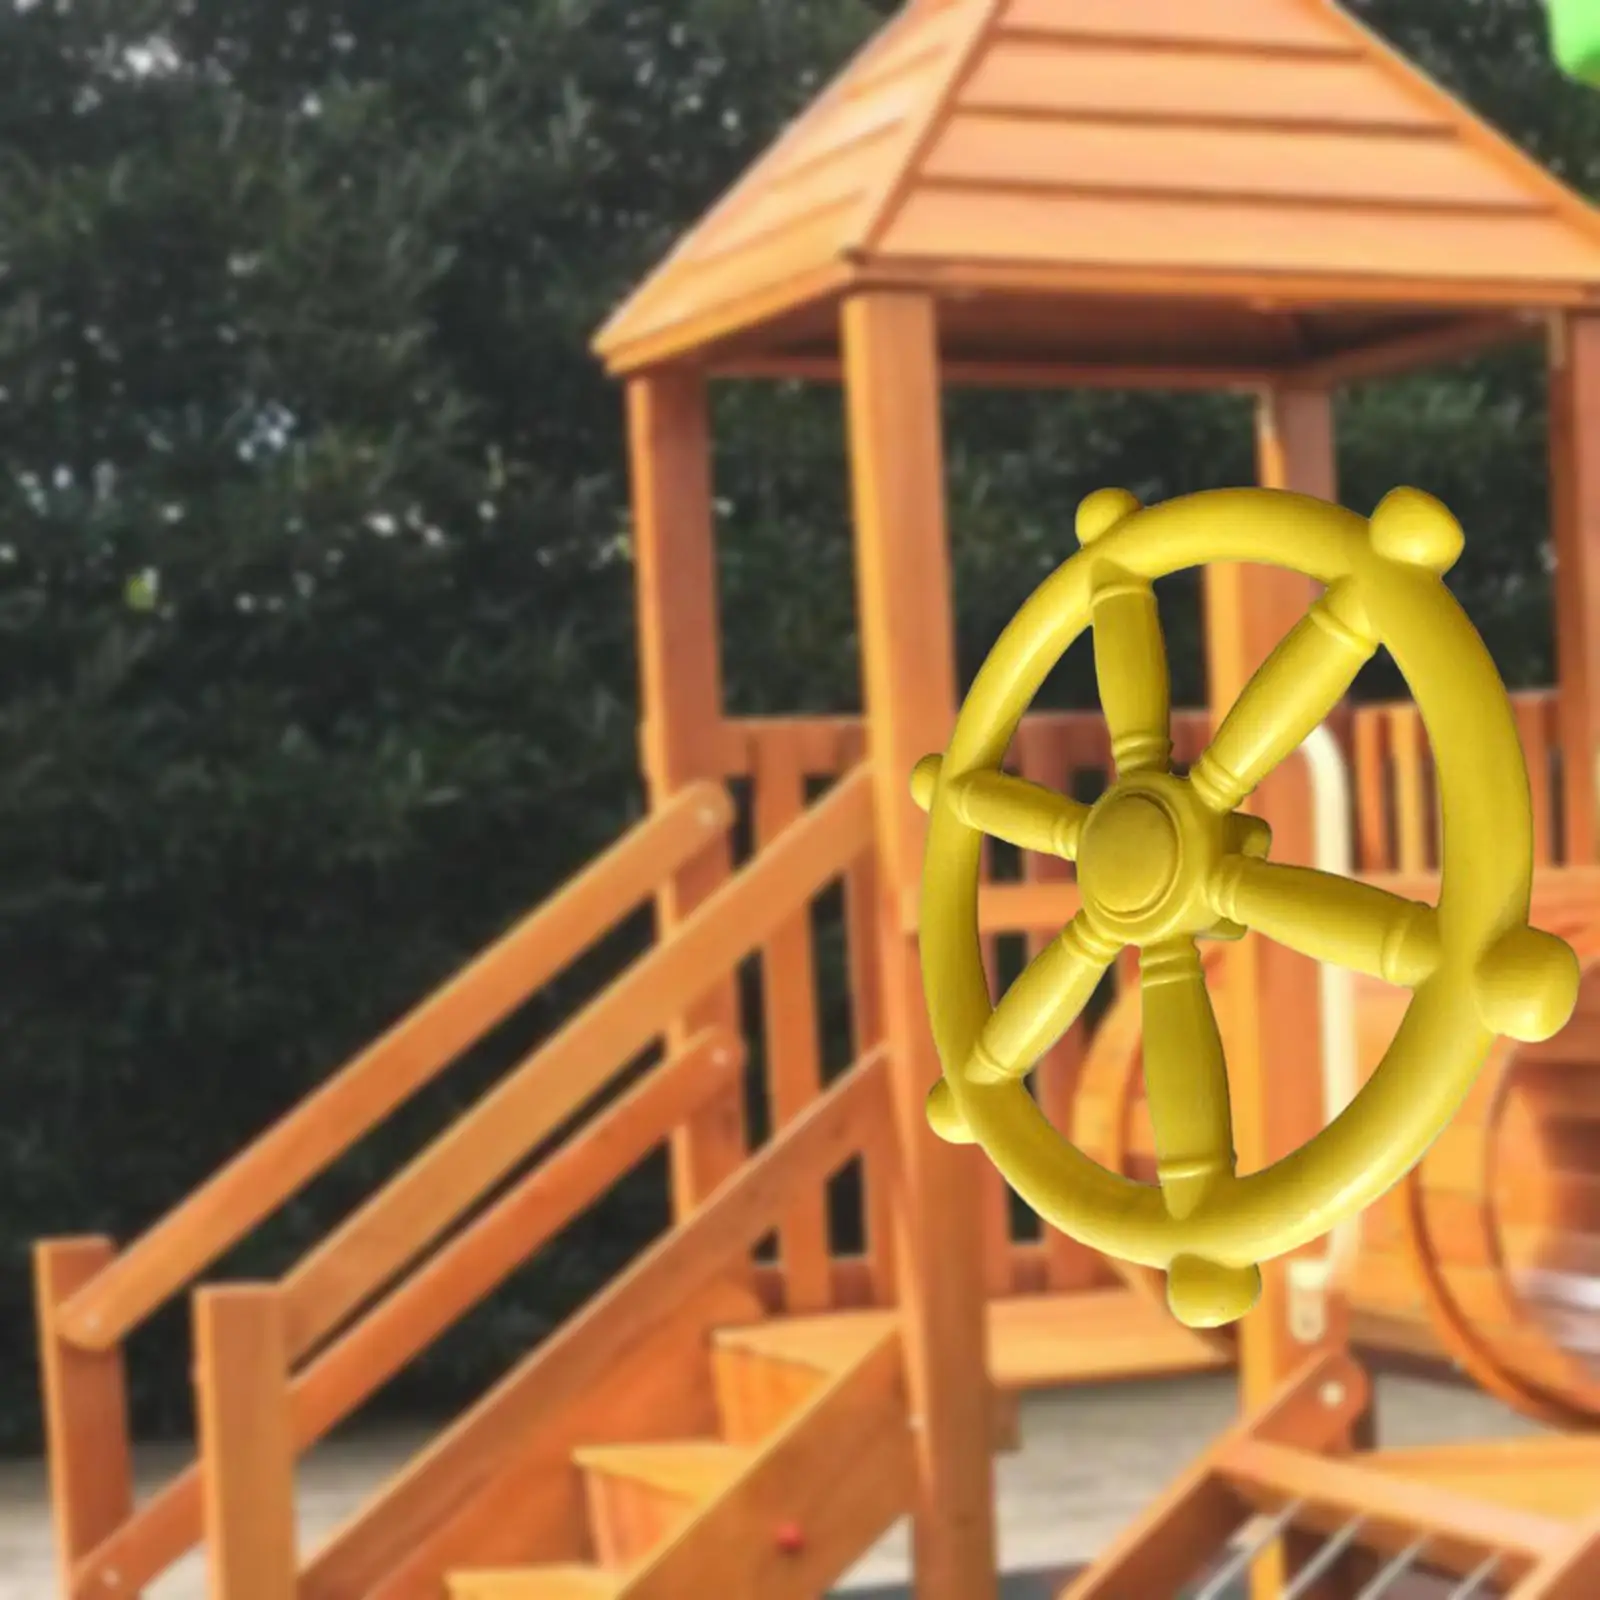 Pirate Ship Wheel Playground Equipment for Swingset Backyard Treehouse